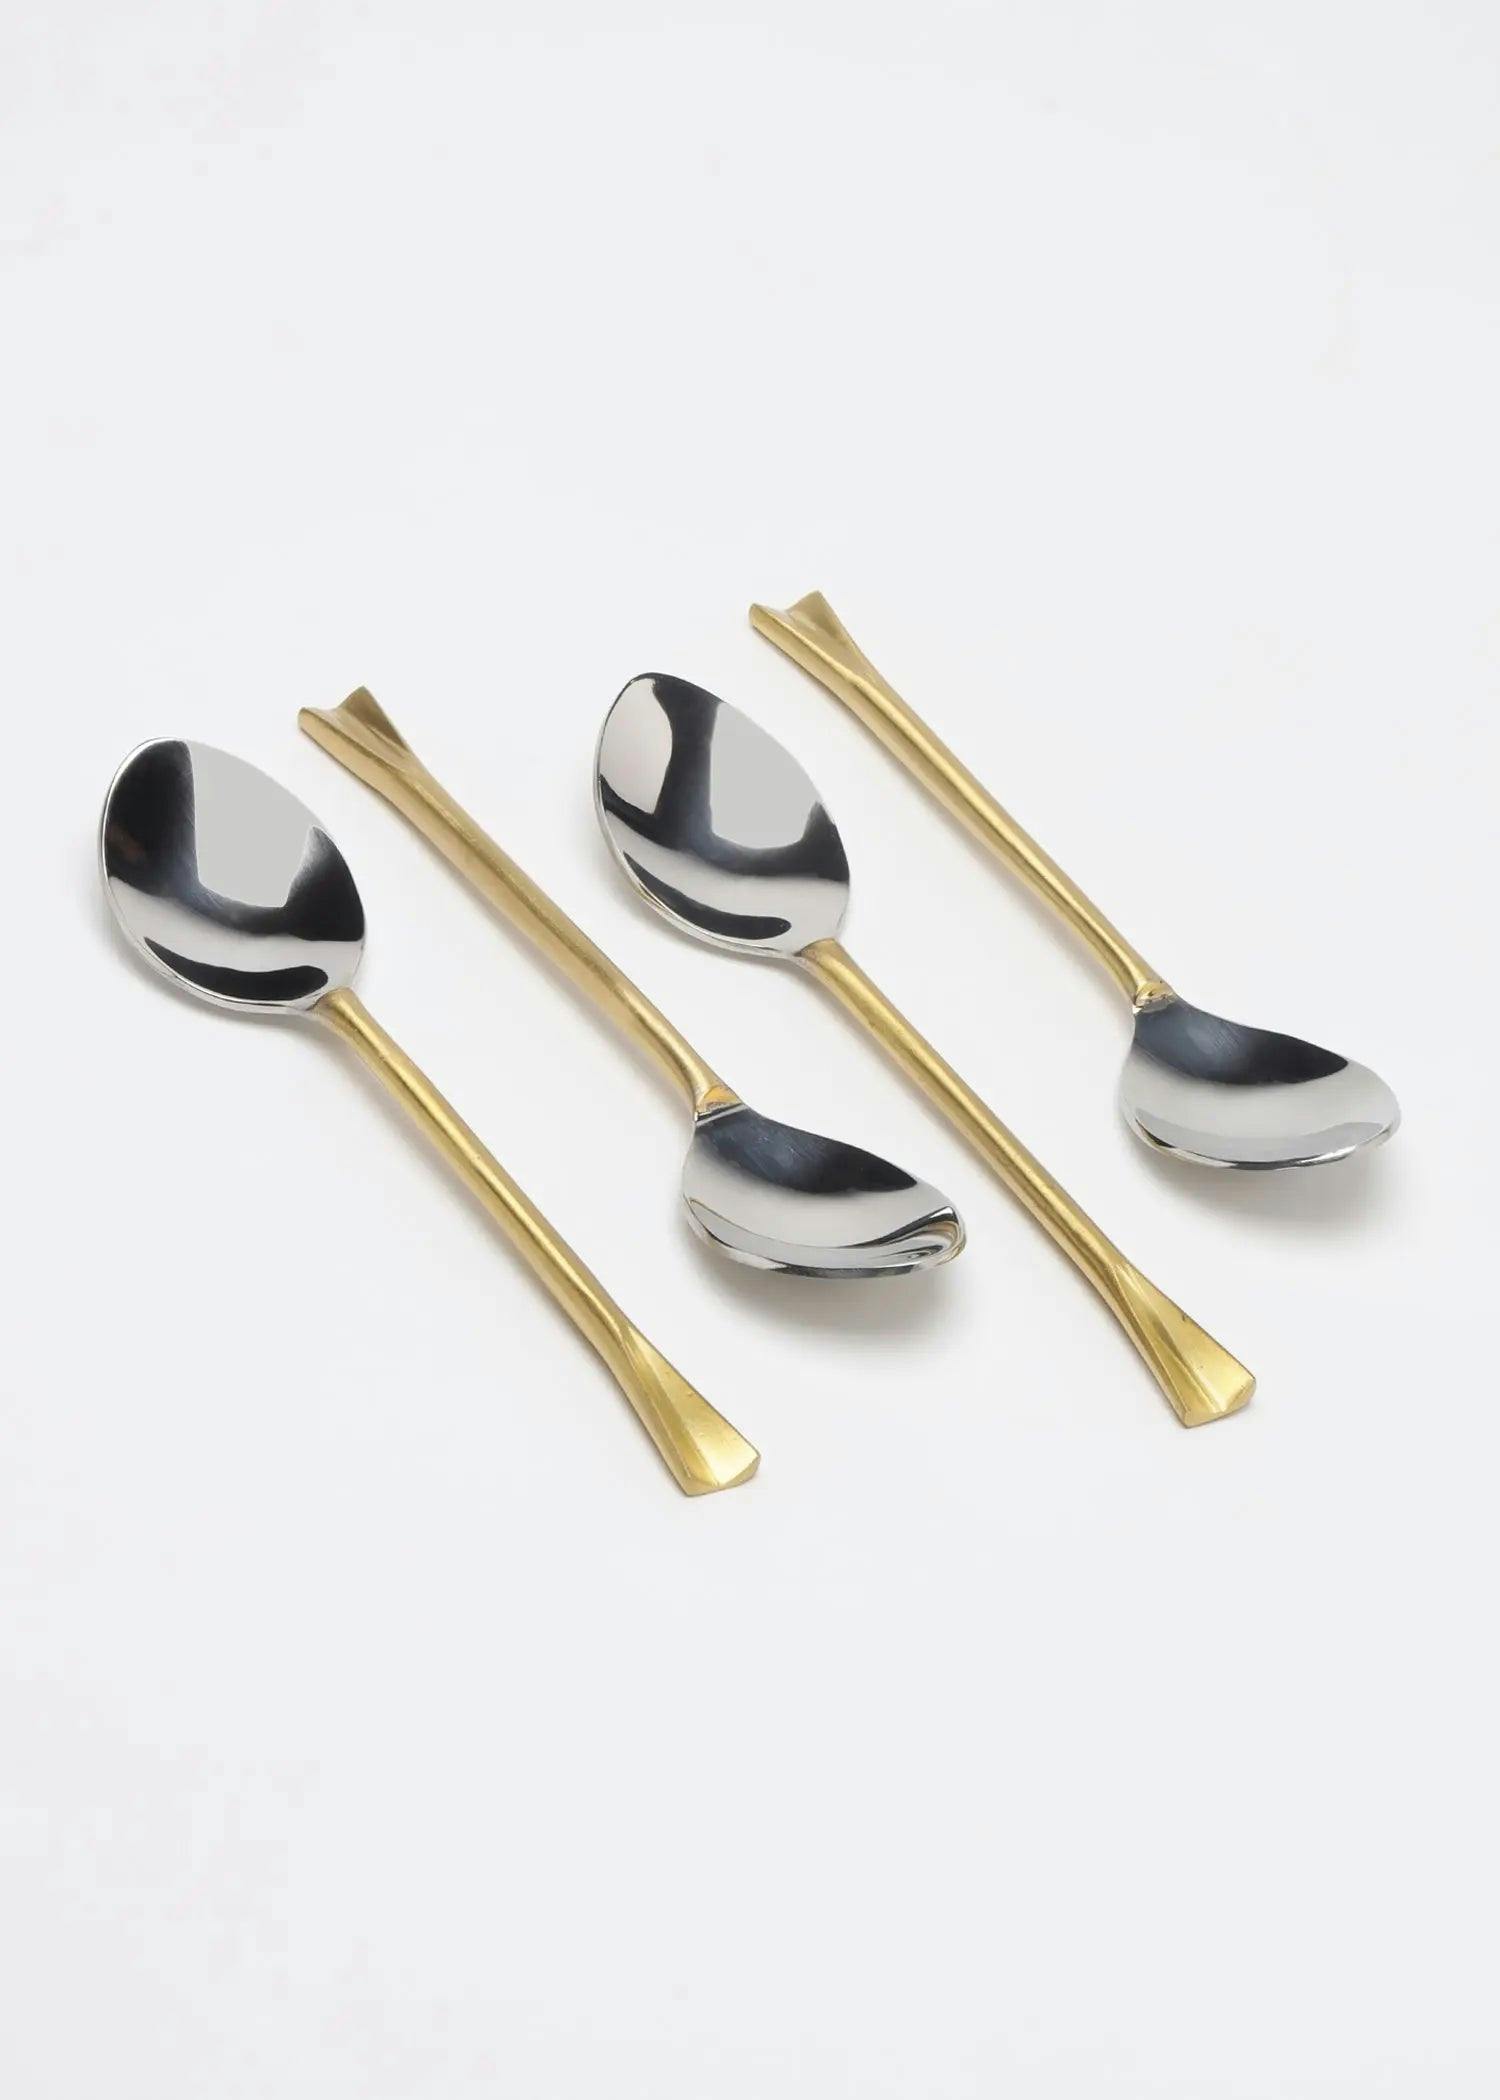 Sona Chaandi Dessert Spoons, a product by Gado Living